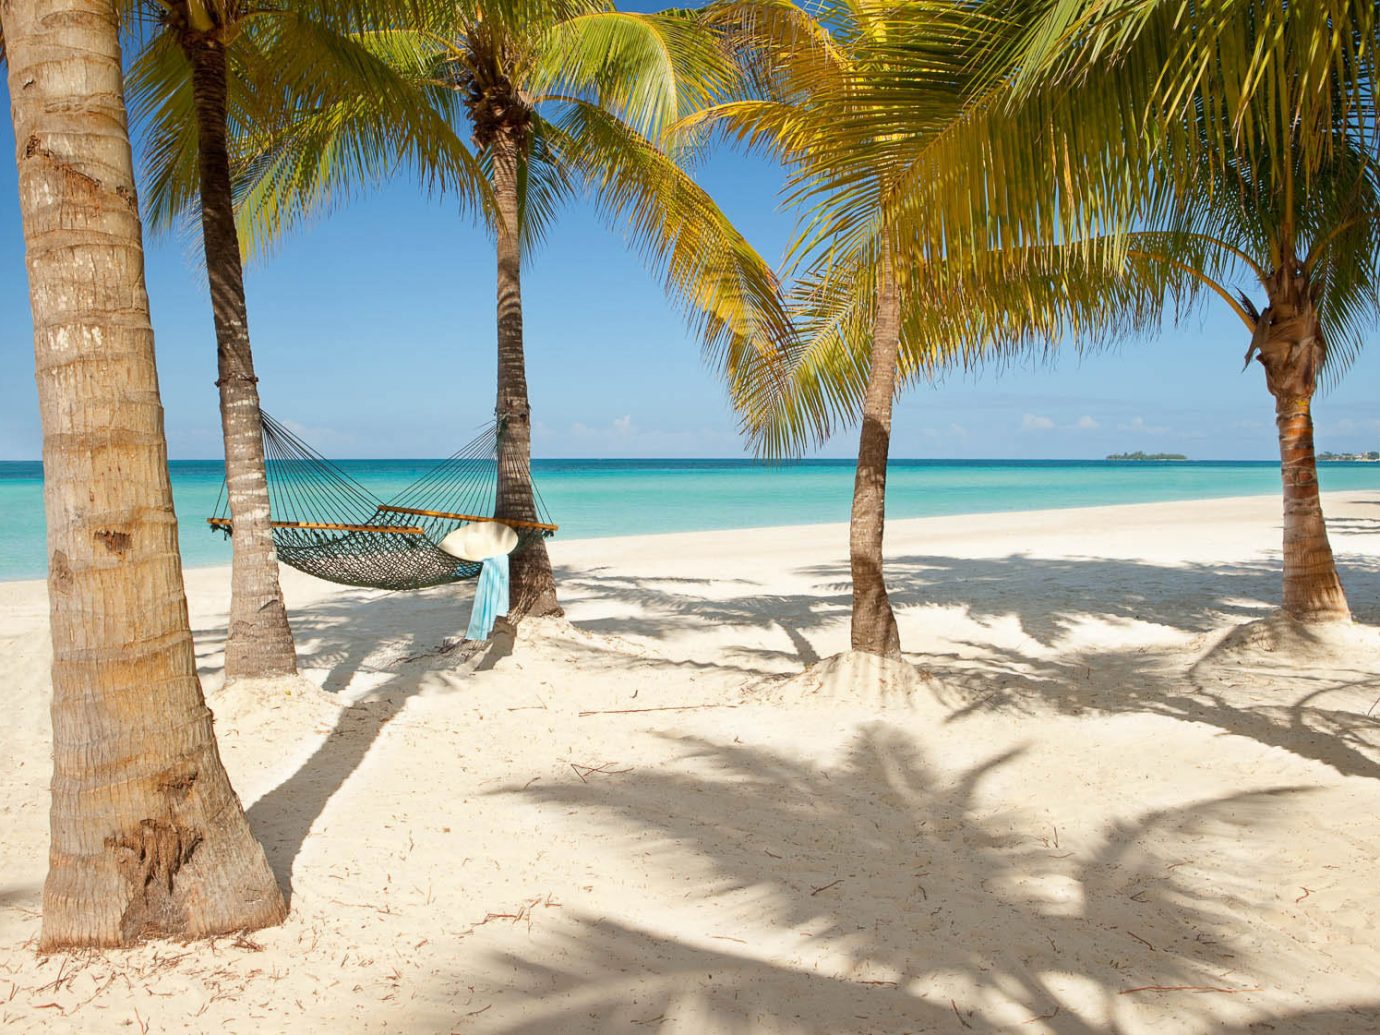 Hotels outdoor Beach water sky tree palm shore body of water Sea Ocean vacation caribbean sandy Nature sand arecales plant Coast tropics bay shade